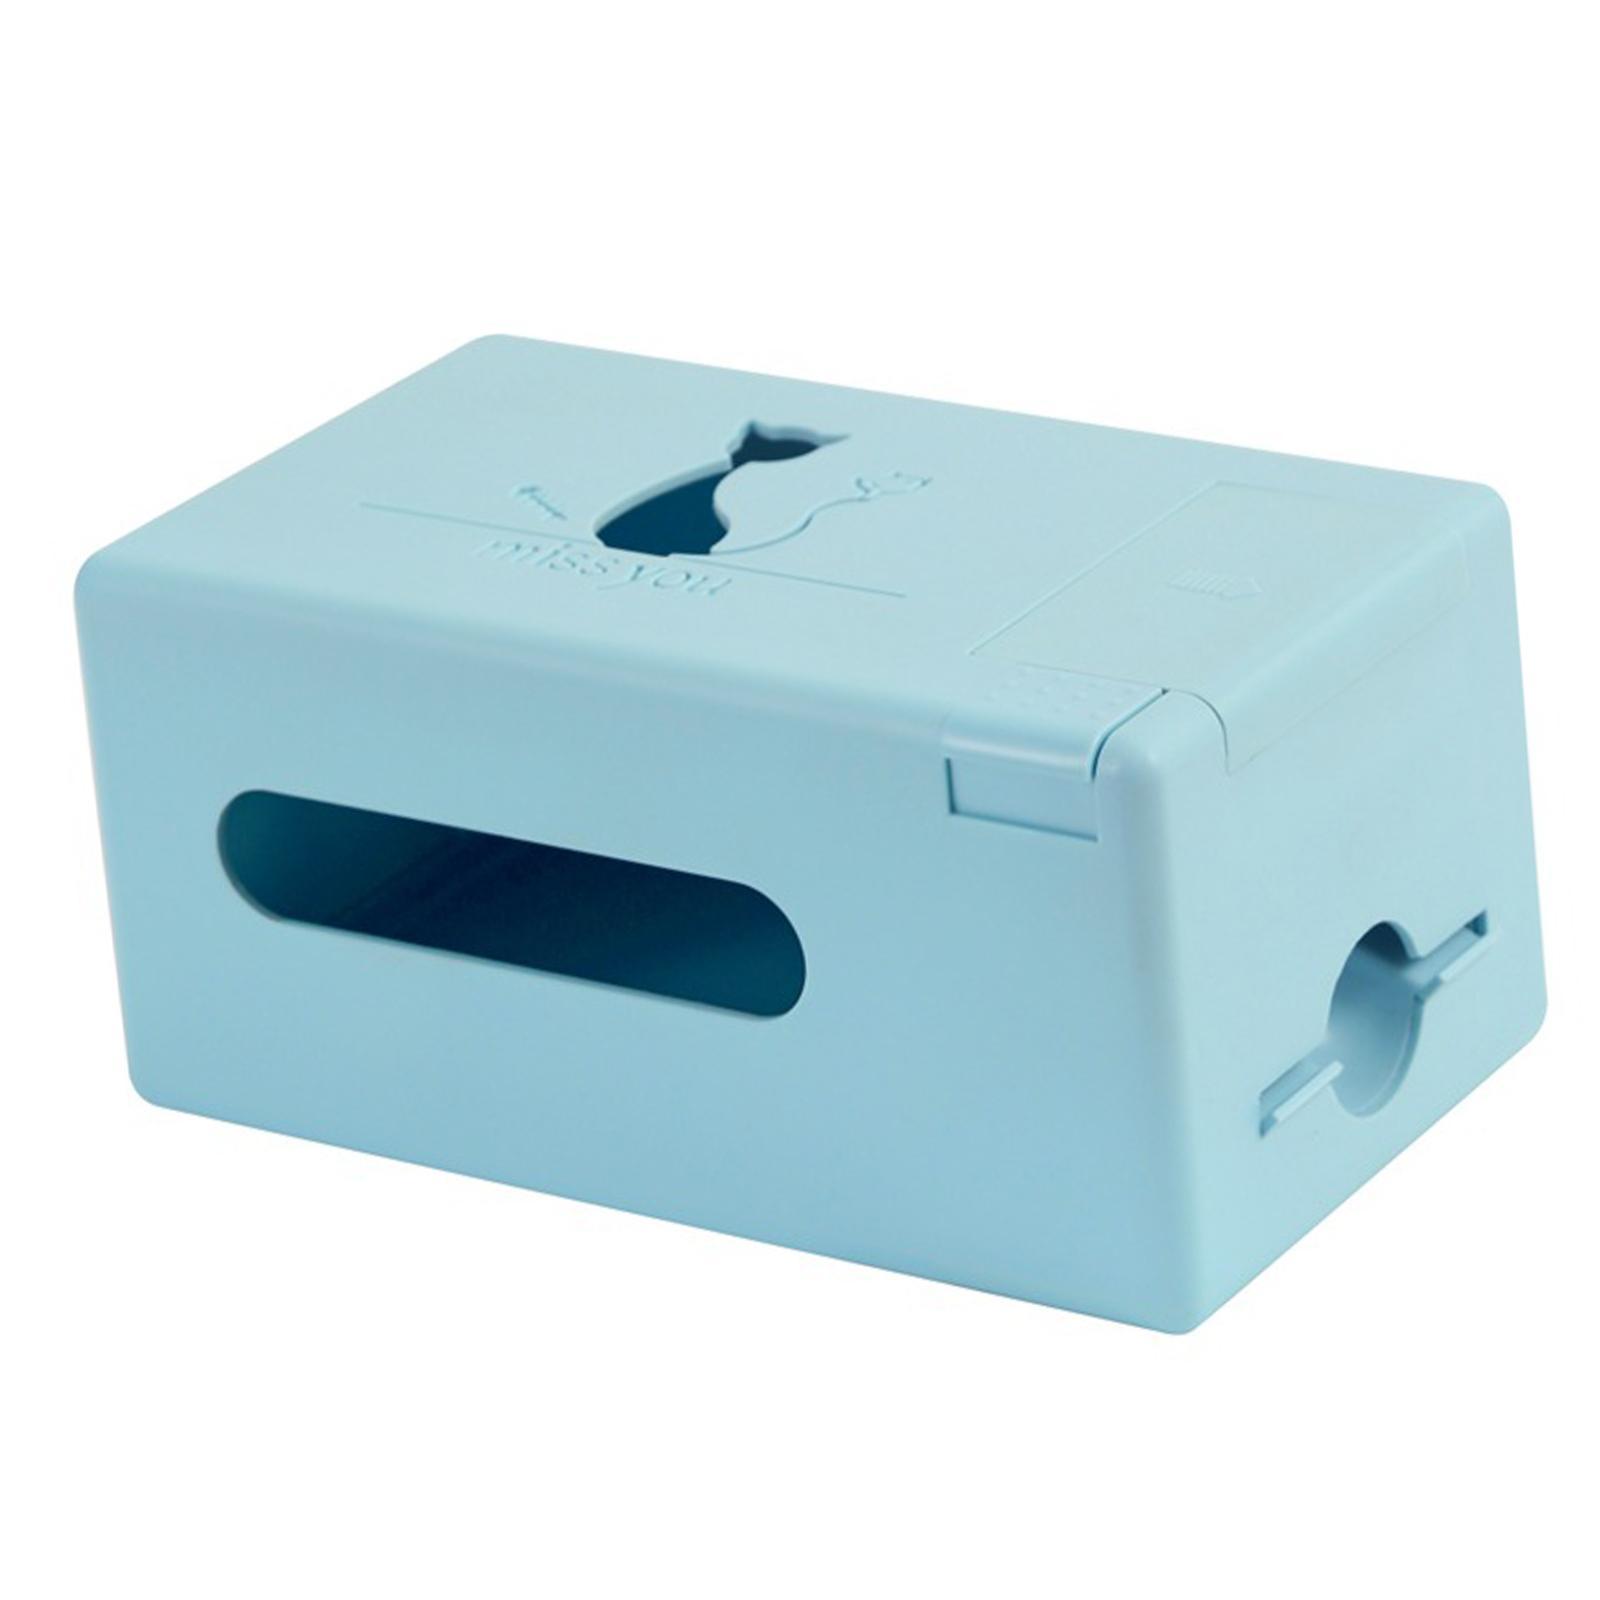 Napkin Paper Storage Box Desktop Tissue Box for Countertop Hotel